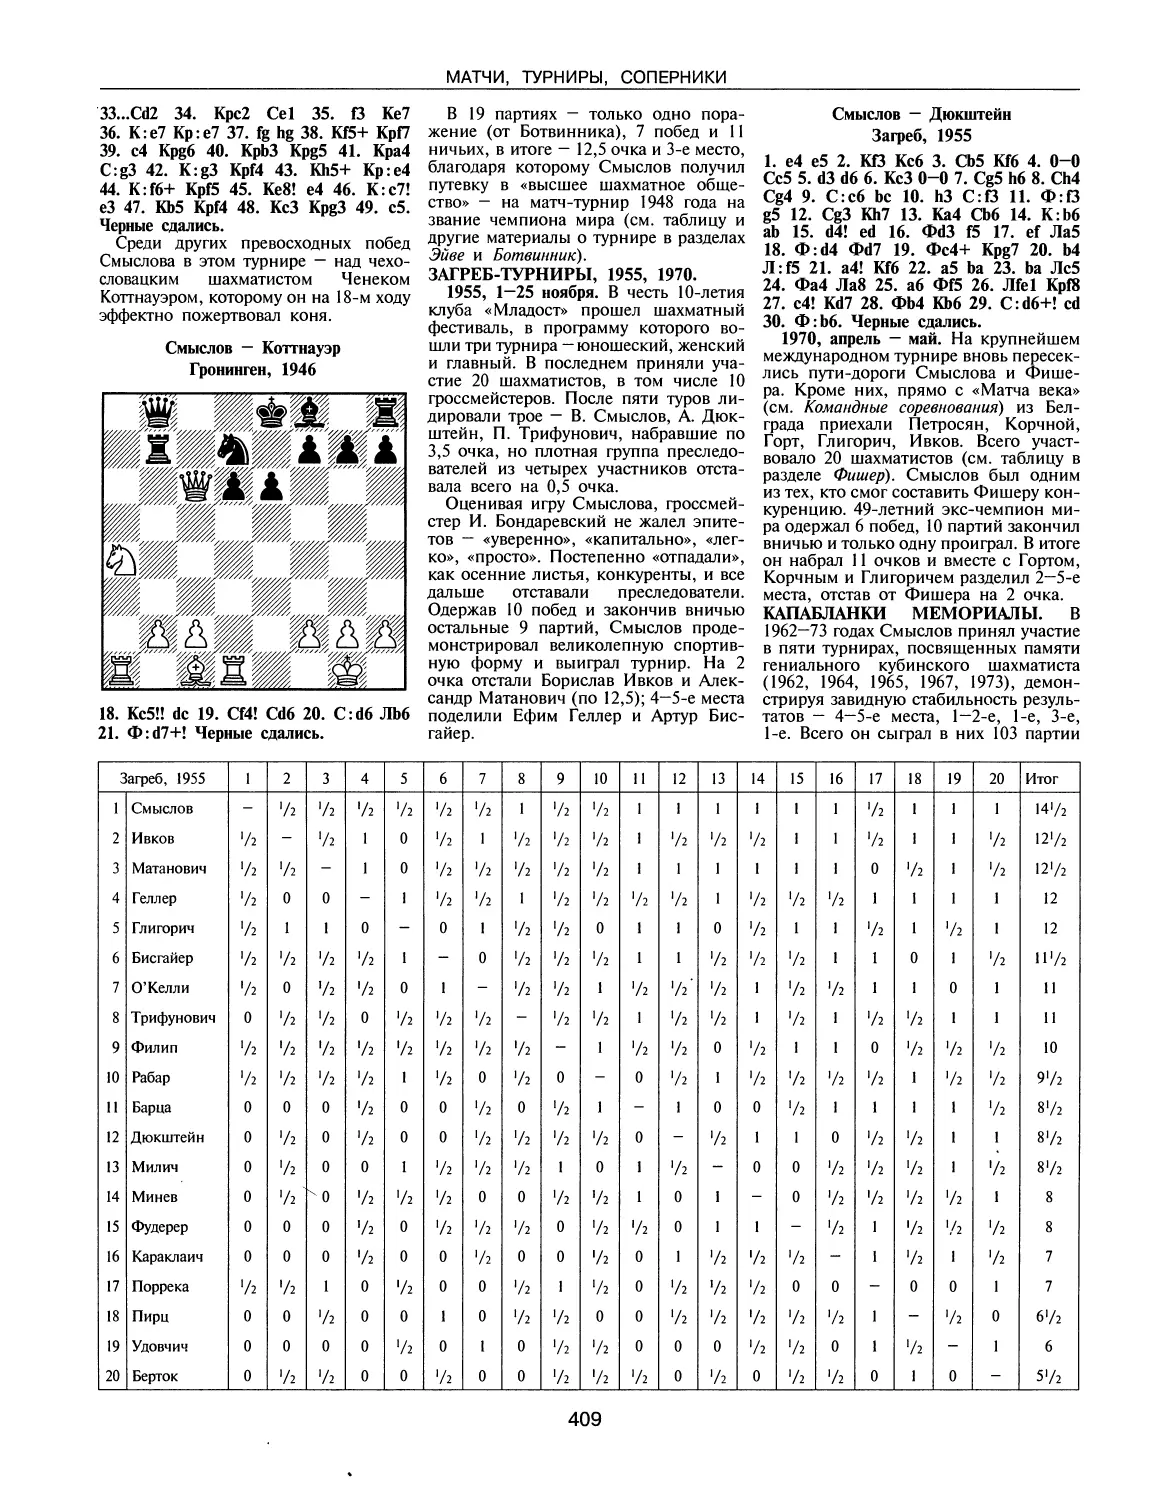 Загреб-турниры, 1955, 1970
Капабланки мемориалы